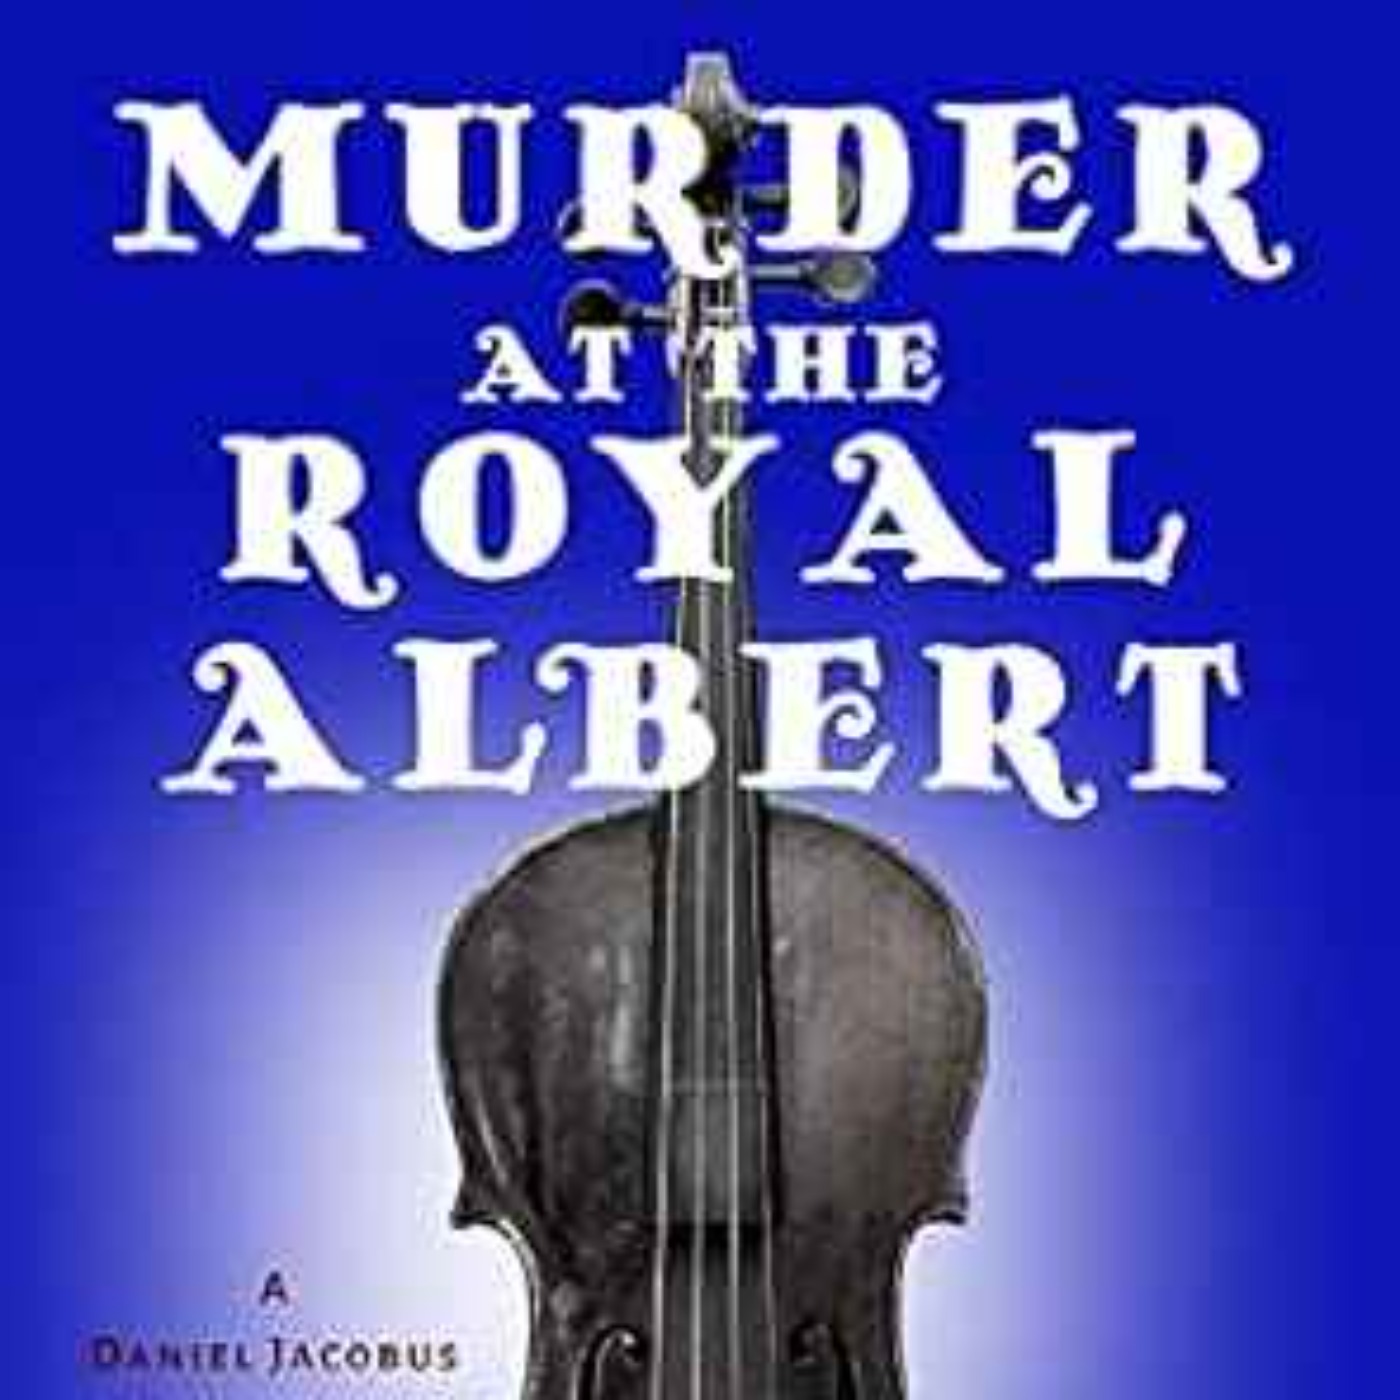 Gerald Elias - Murder at the Royal Albert